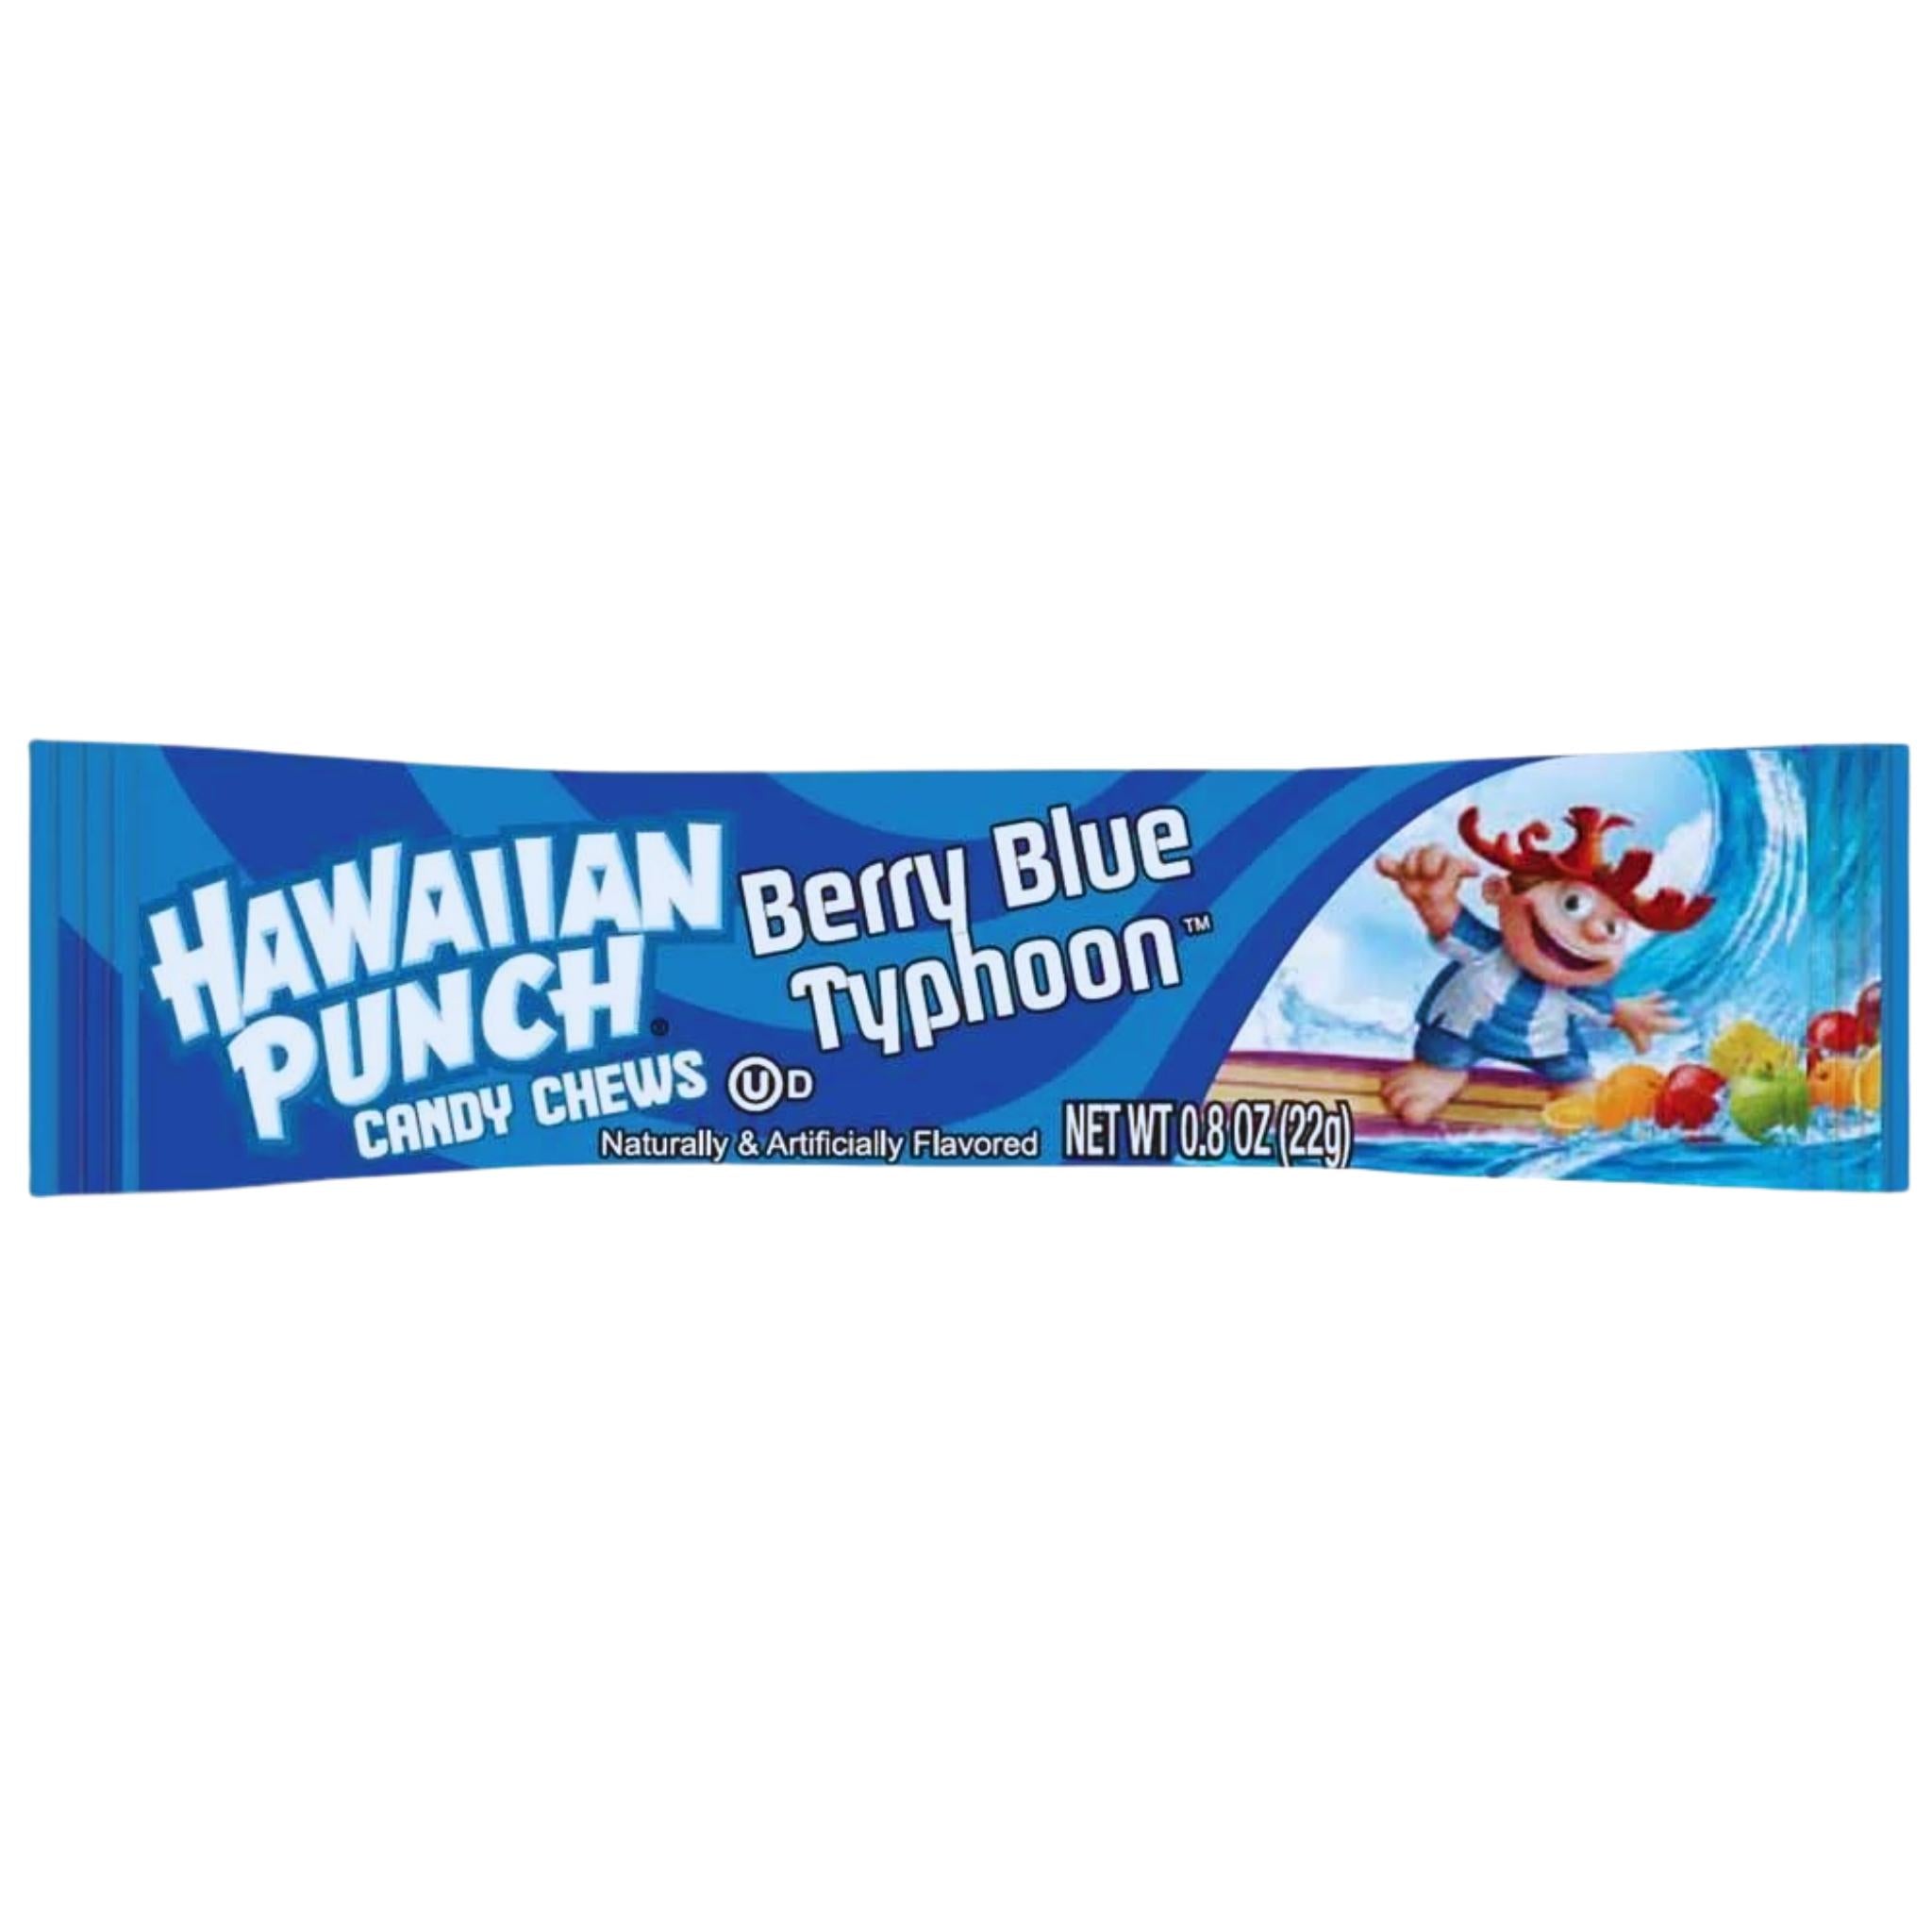 Hawaiian Punch Berry Blue Typhoon - 22g